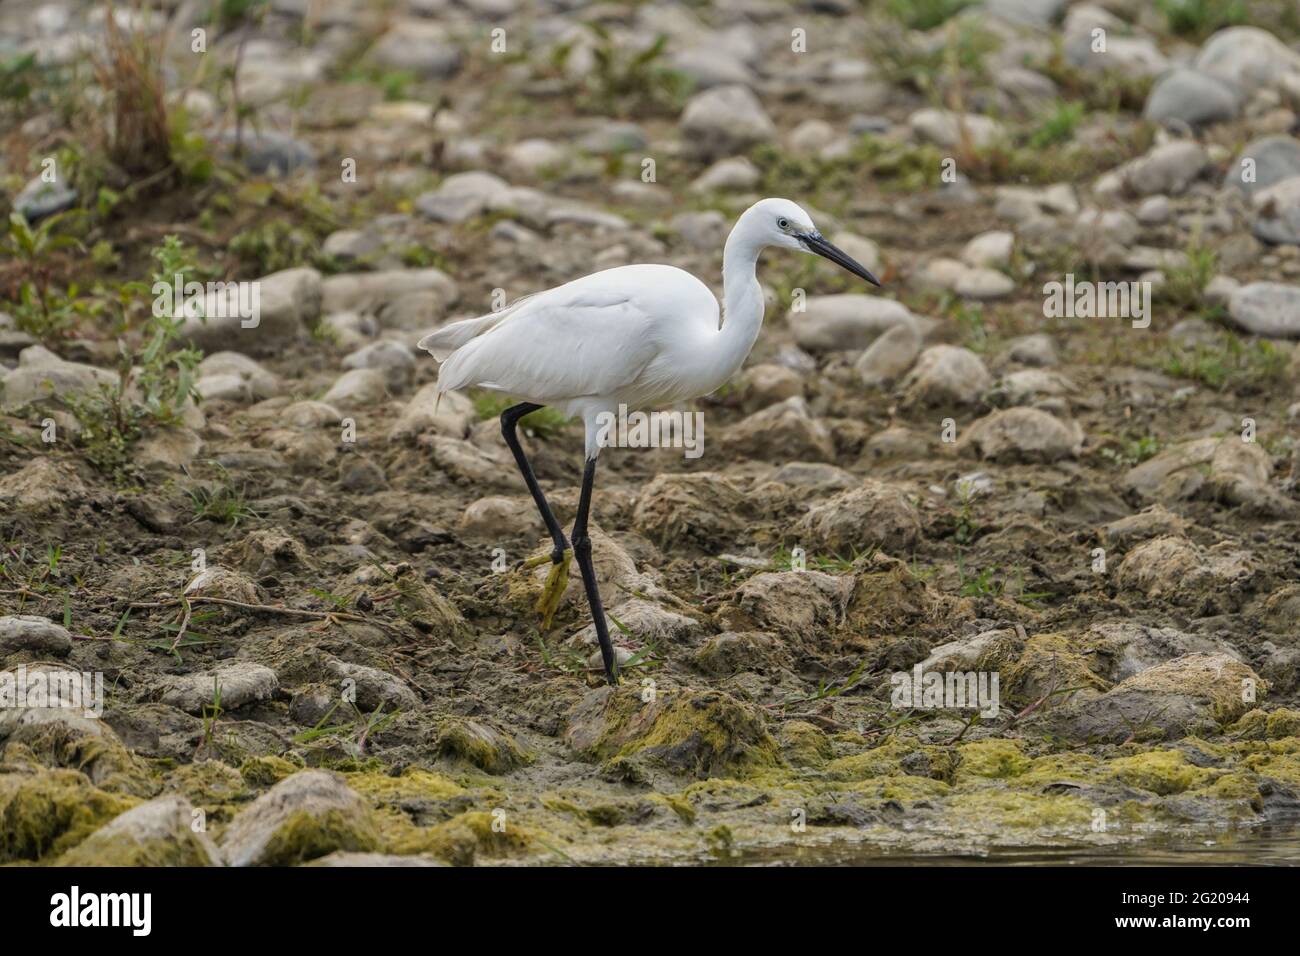 Little egret, Egretta garzetta at a river feeding in spring, Andalucia, Spain. Stock Photo